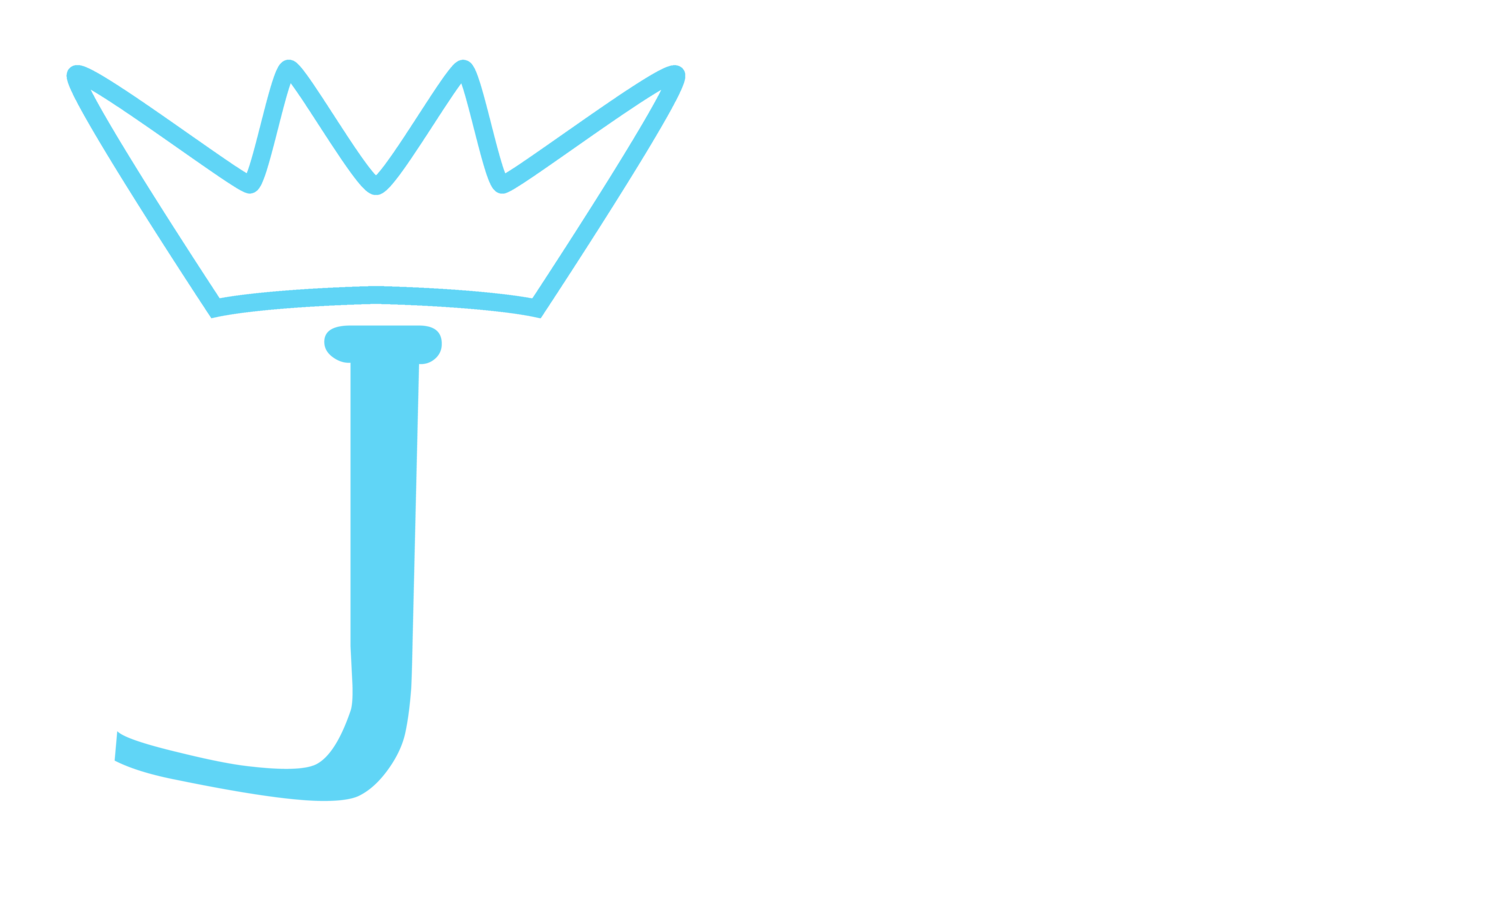 J-stitch